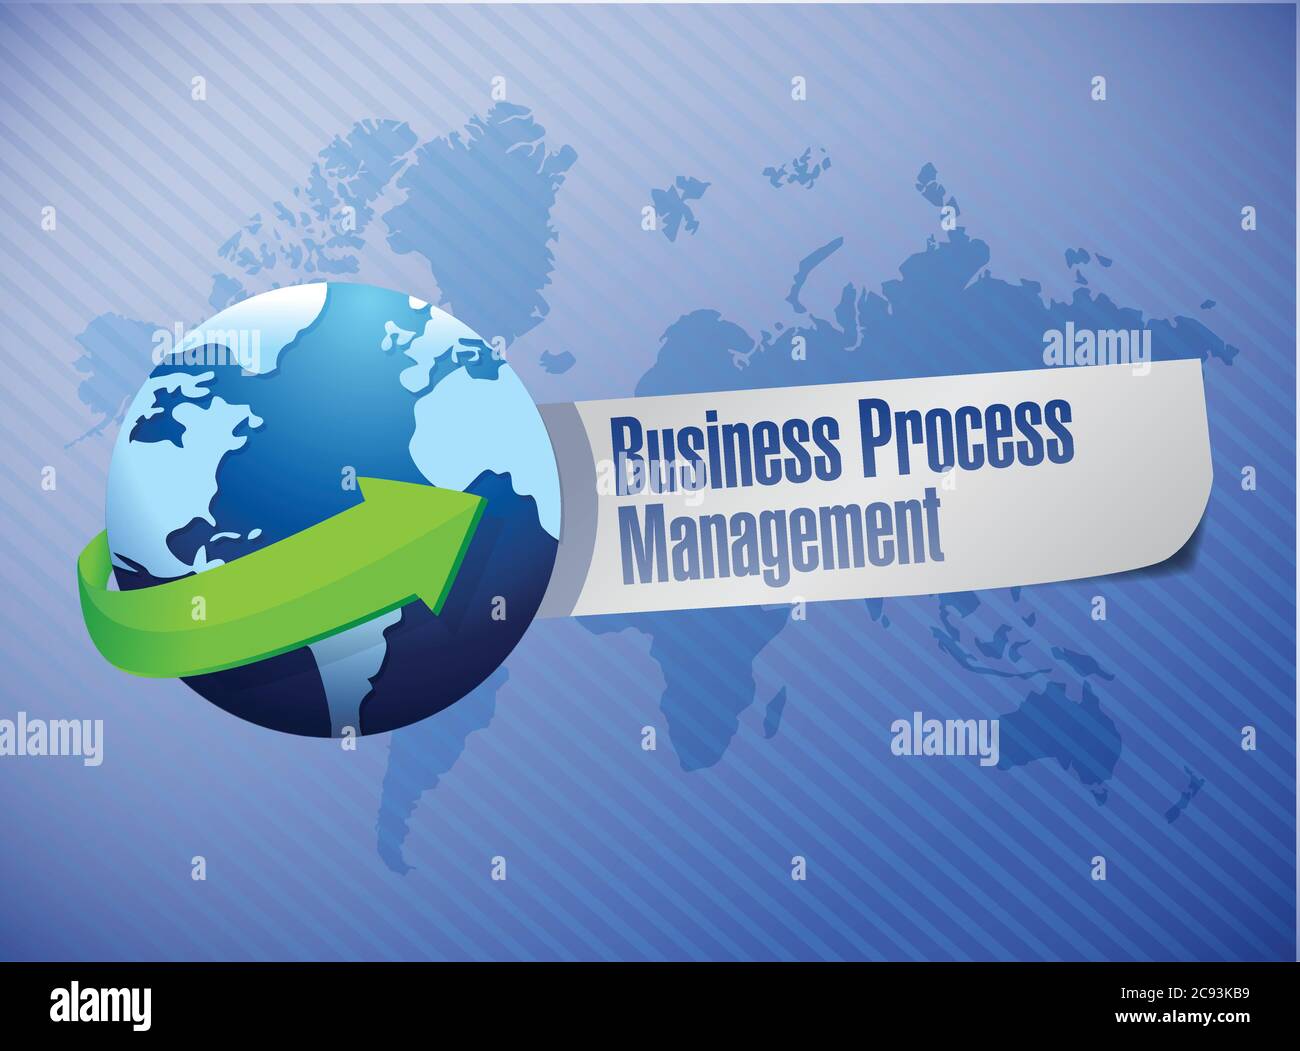 Business process management globe sign illustration design over a world map background Stock Vector